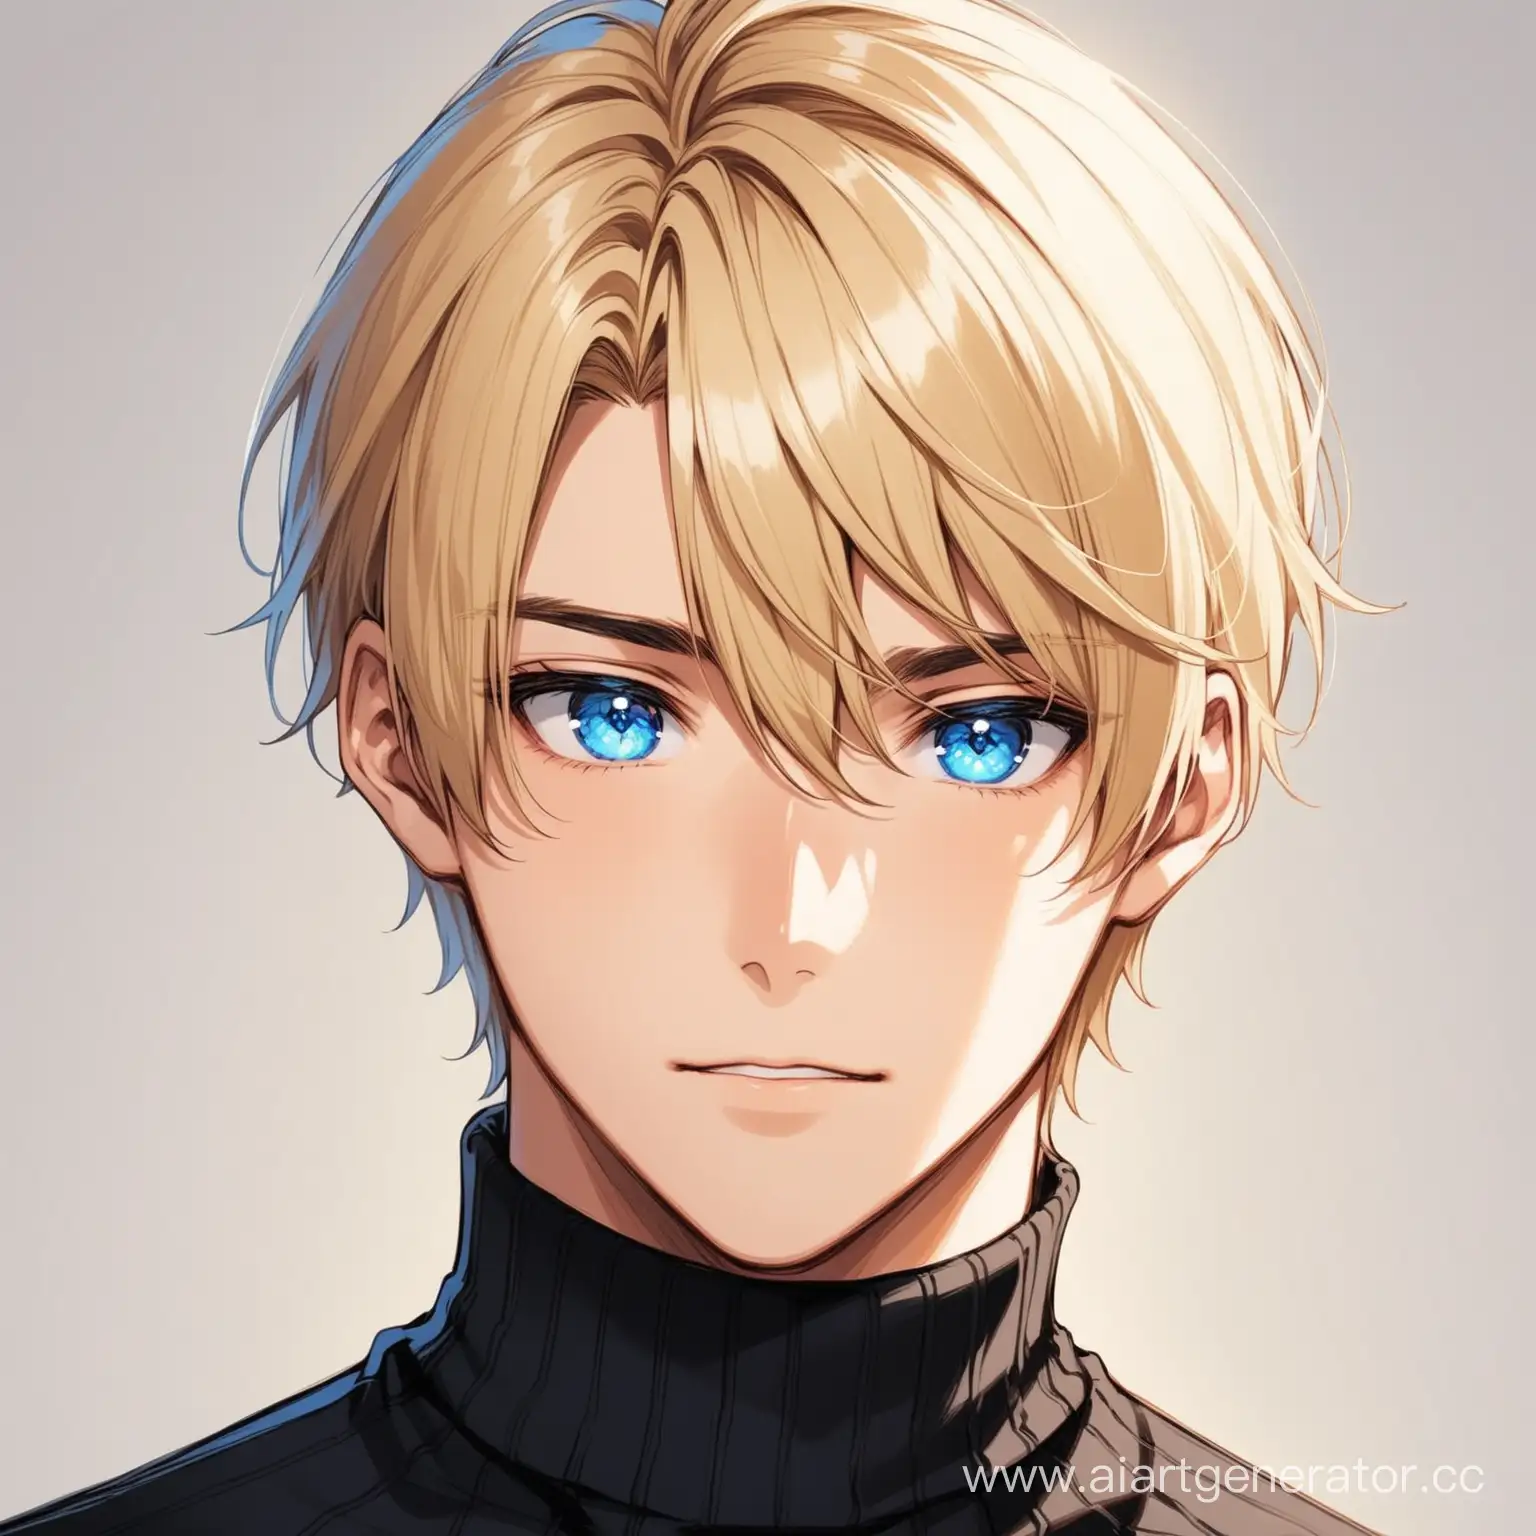 Cute guy, blue eyes, short blond hair, wearing an black turtleneck